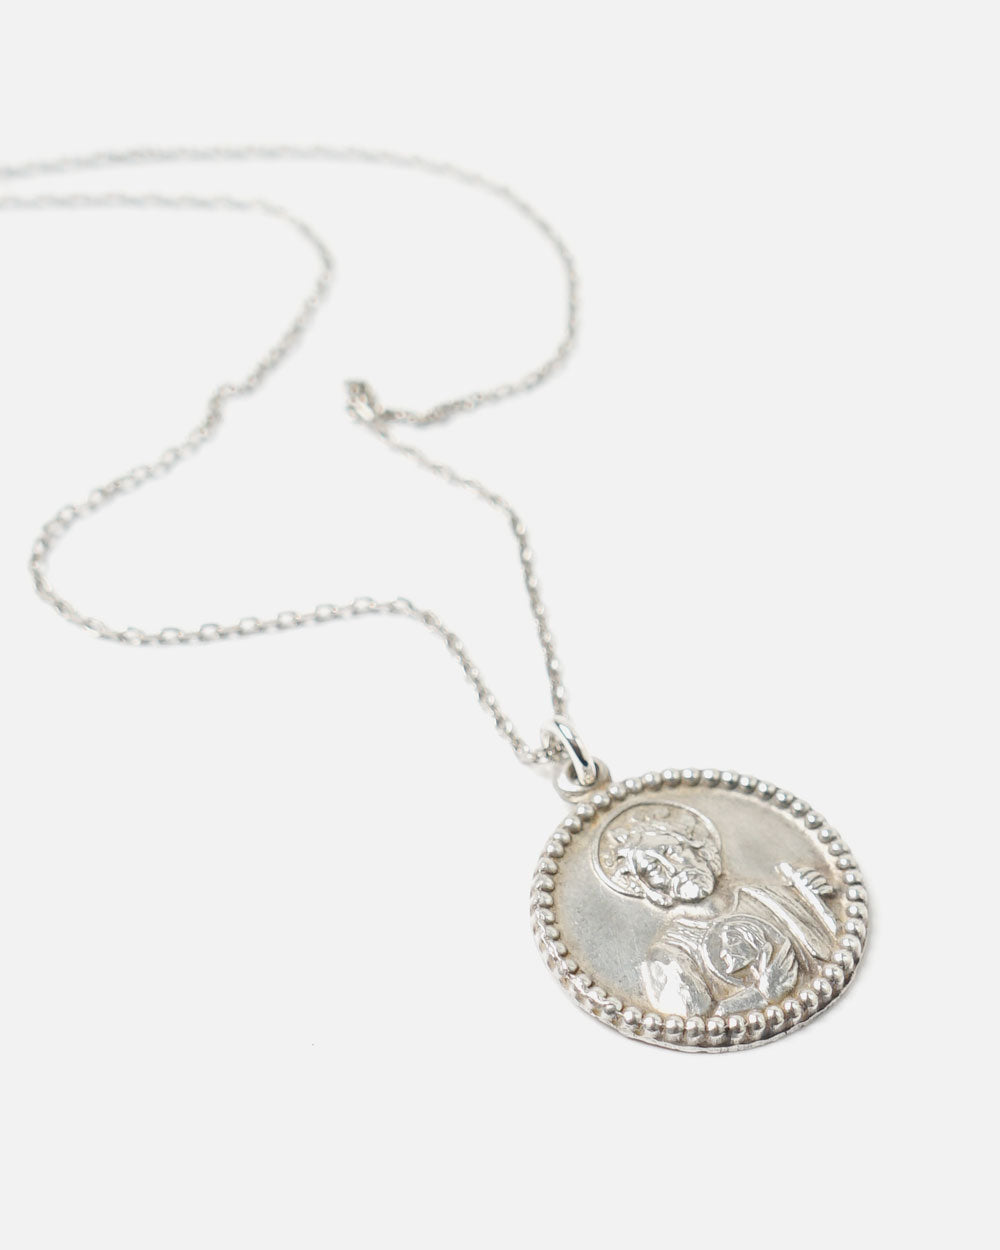 Silver Religious Necklace